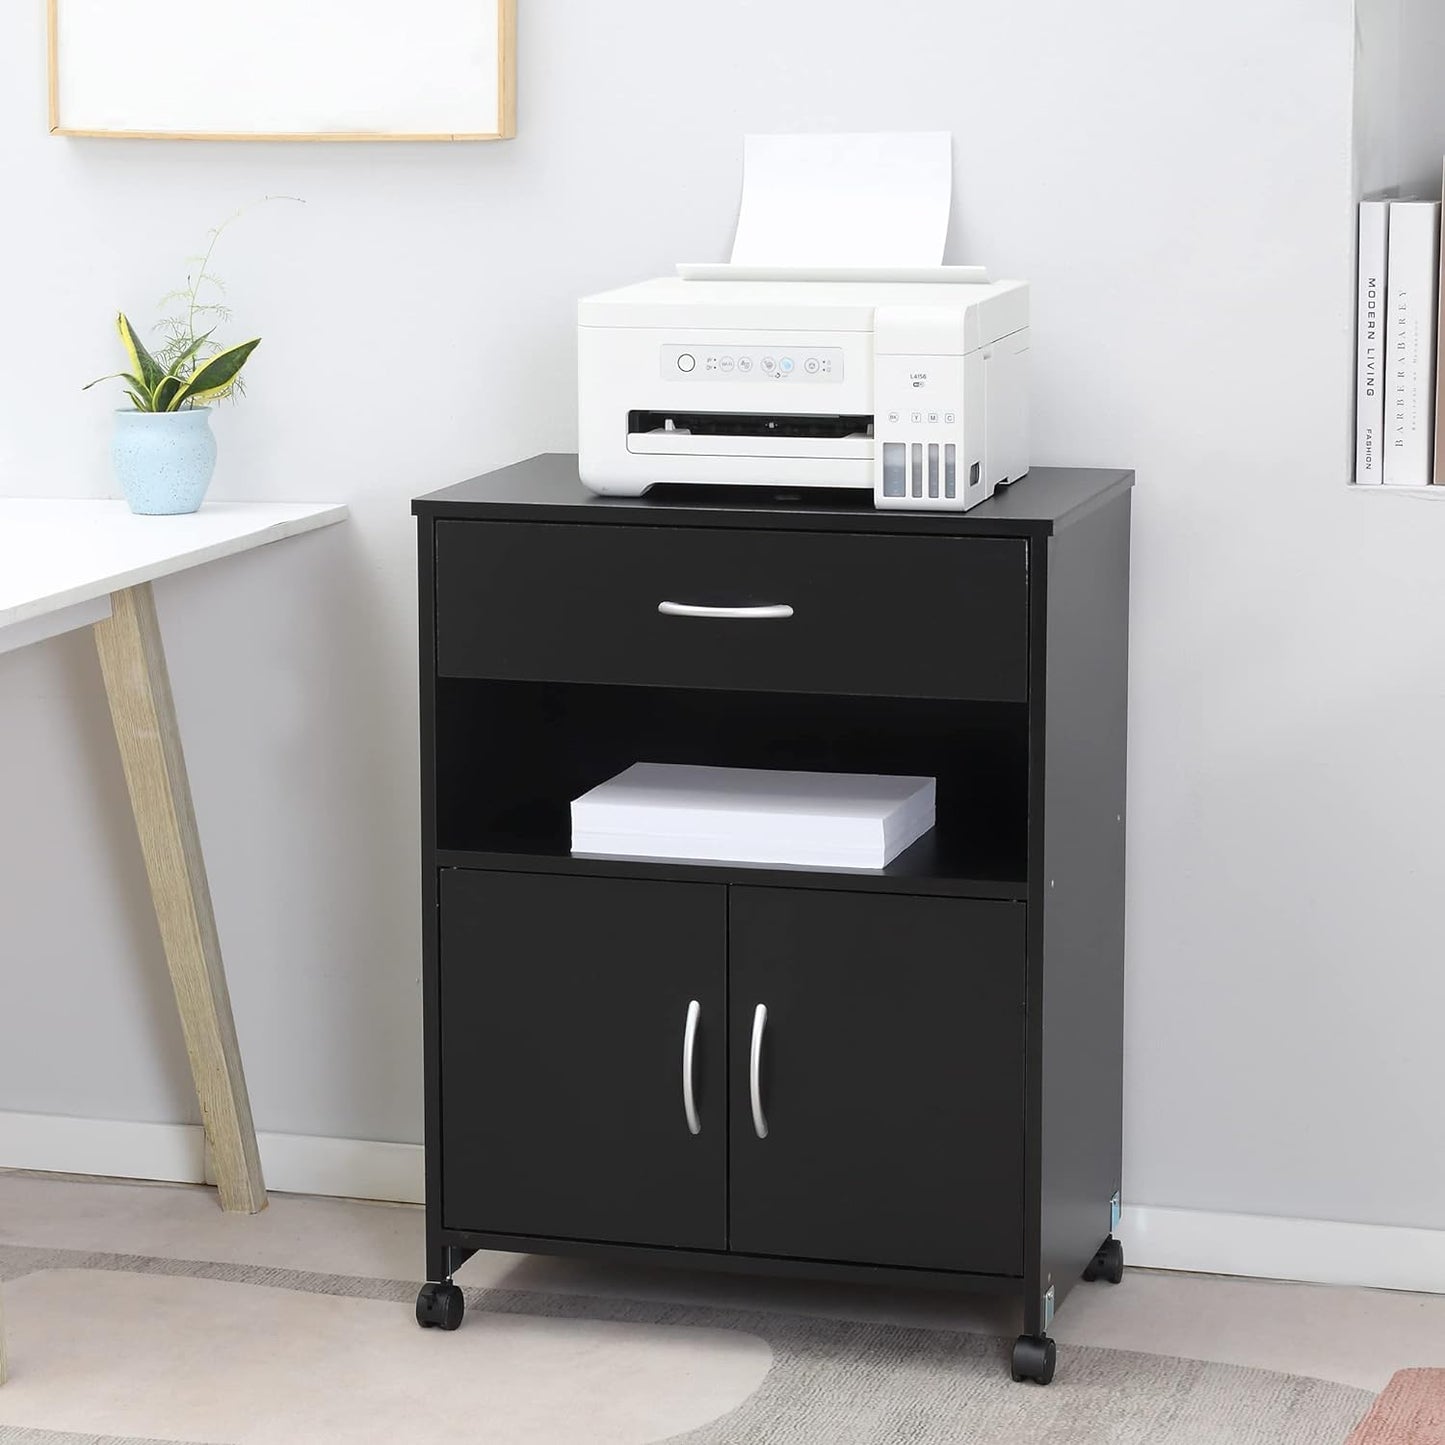 ProperAV Extra Mobile Printer Stand Storage Cabinet - Black - maplin.co.uk